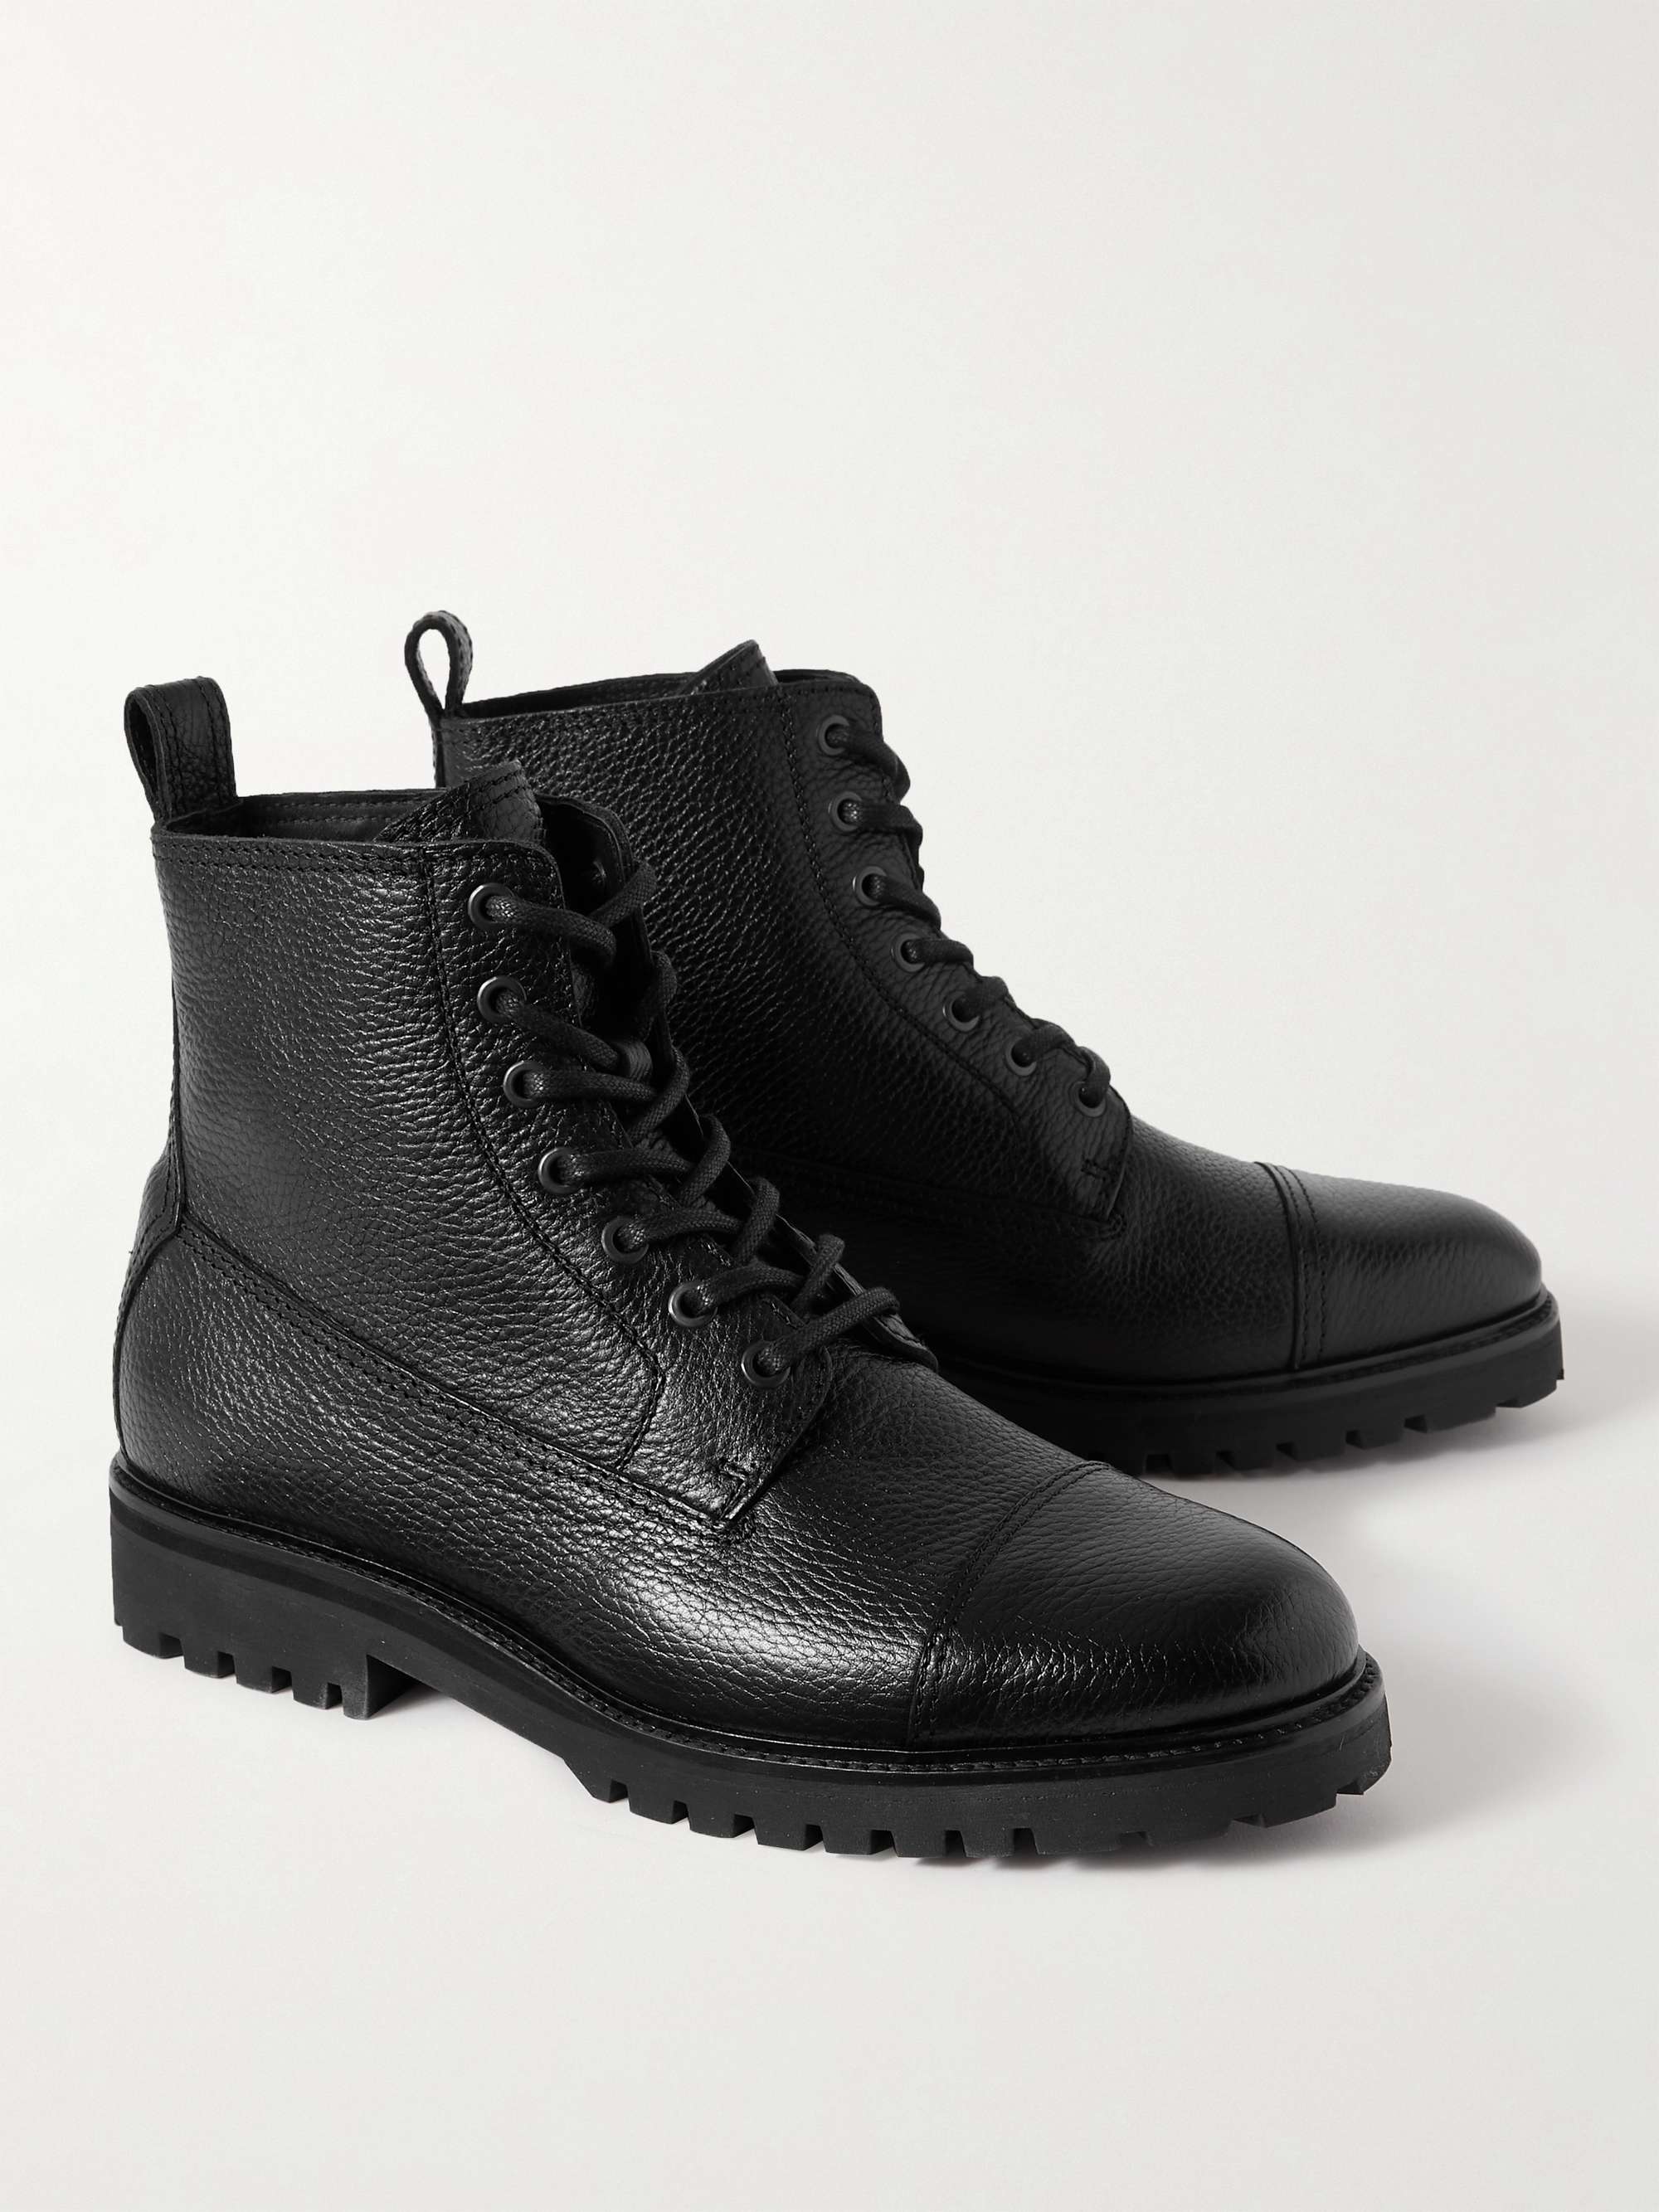 BELSTAFF Alperton Full-Grain Leather Boots | MR PORTER